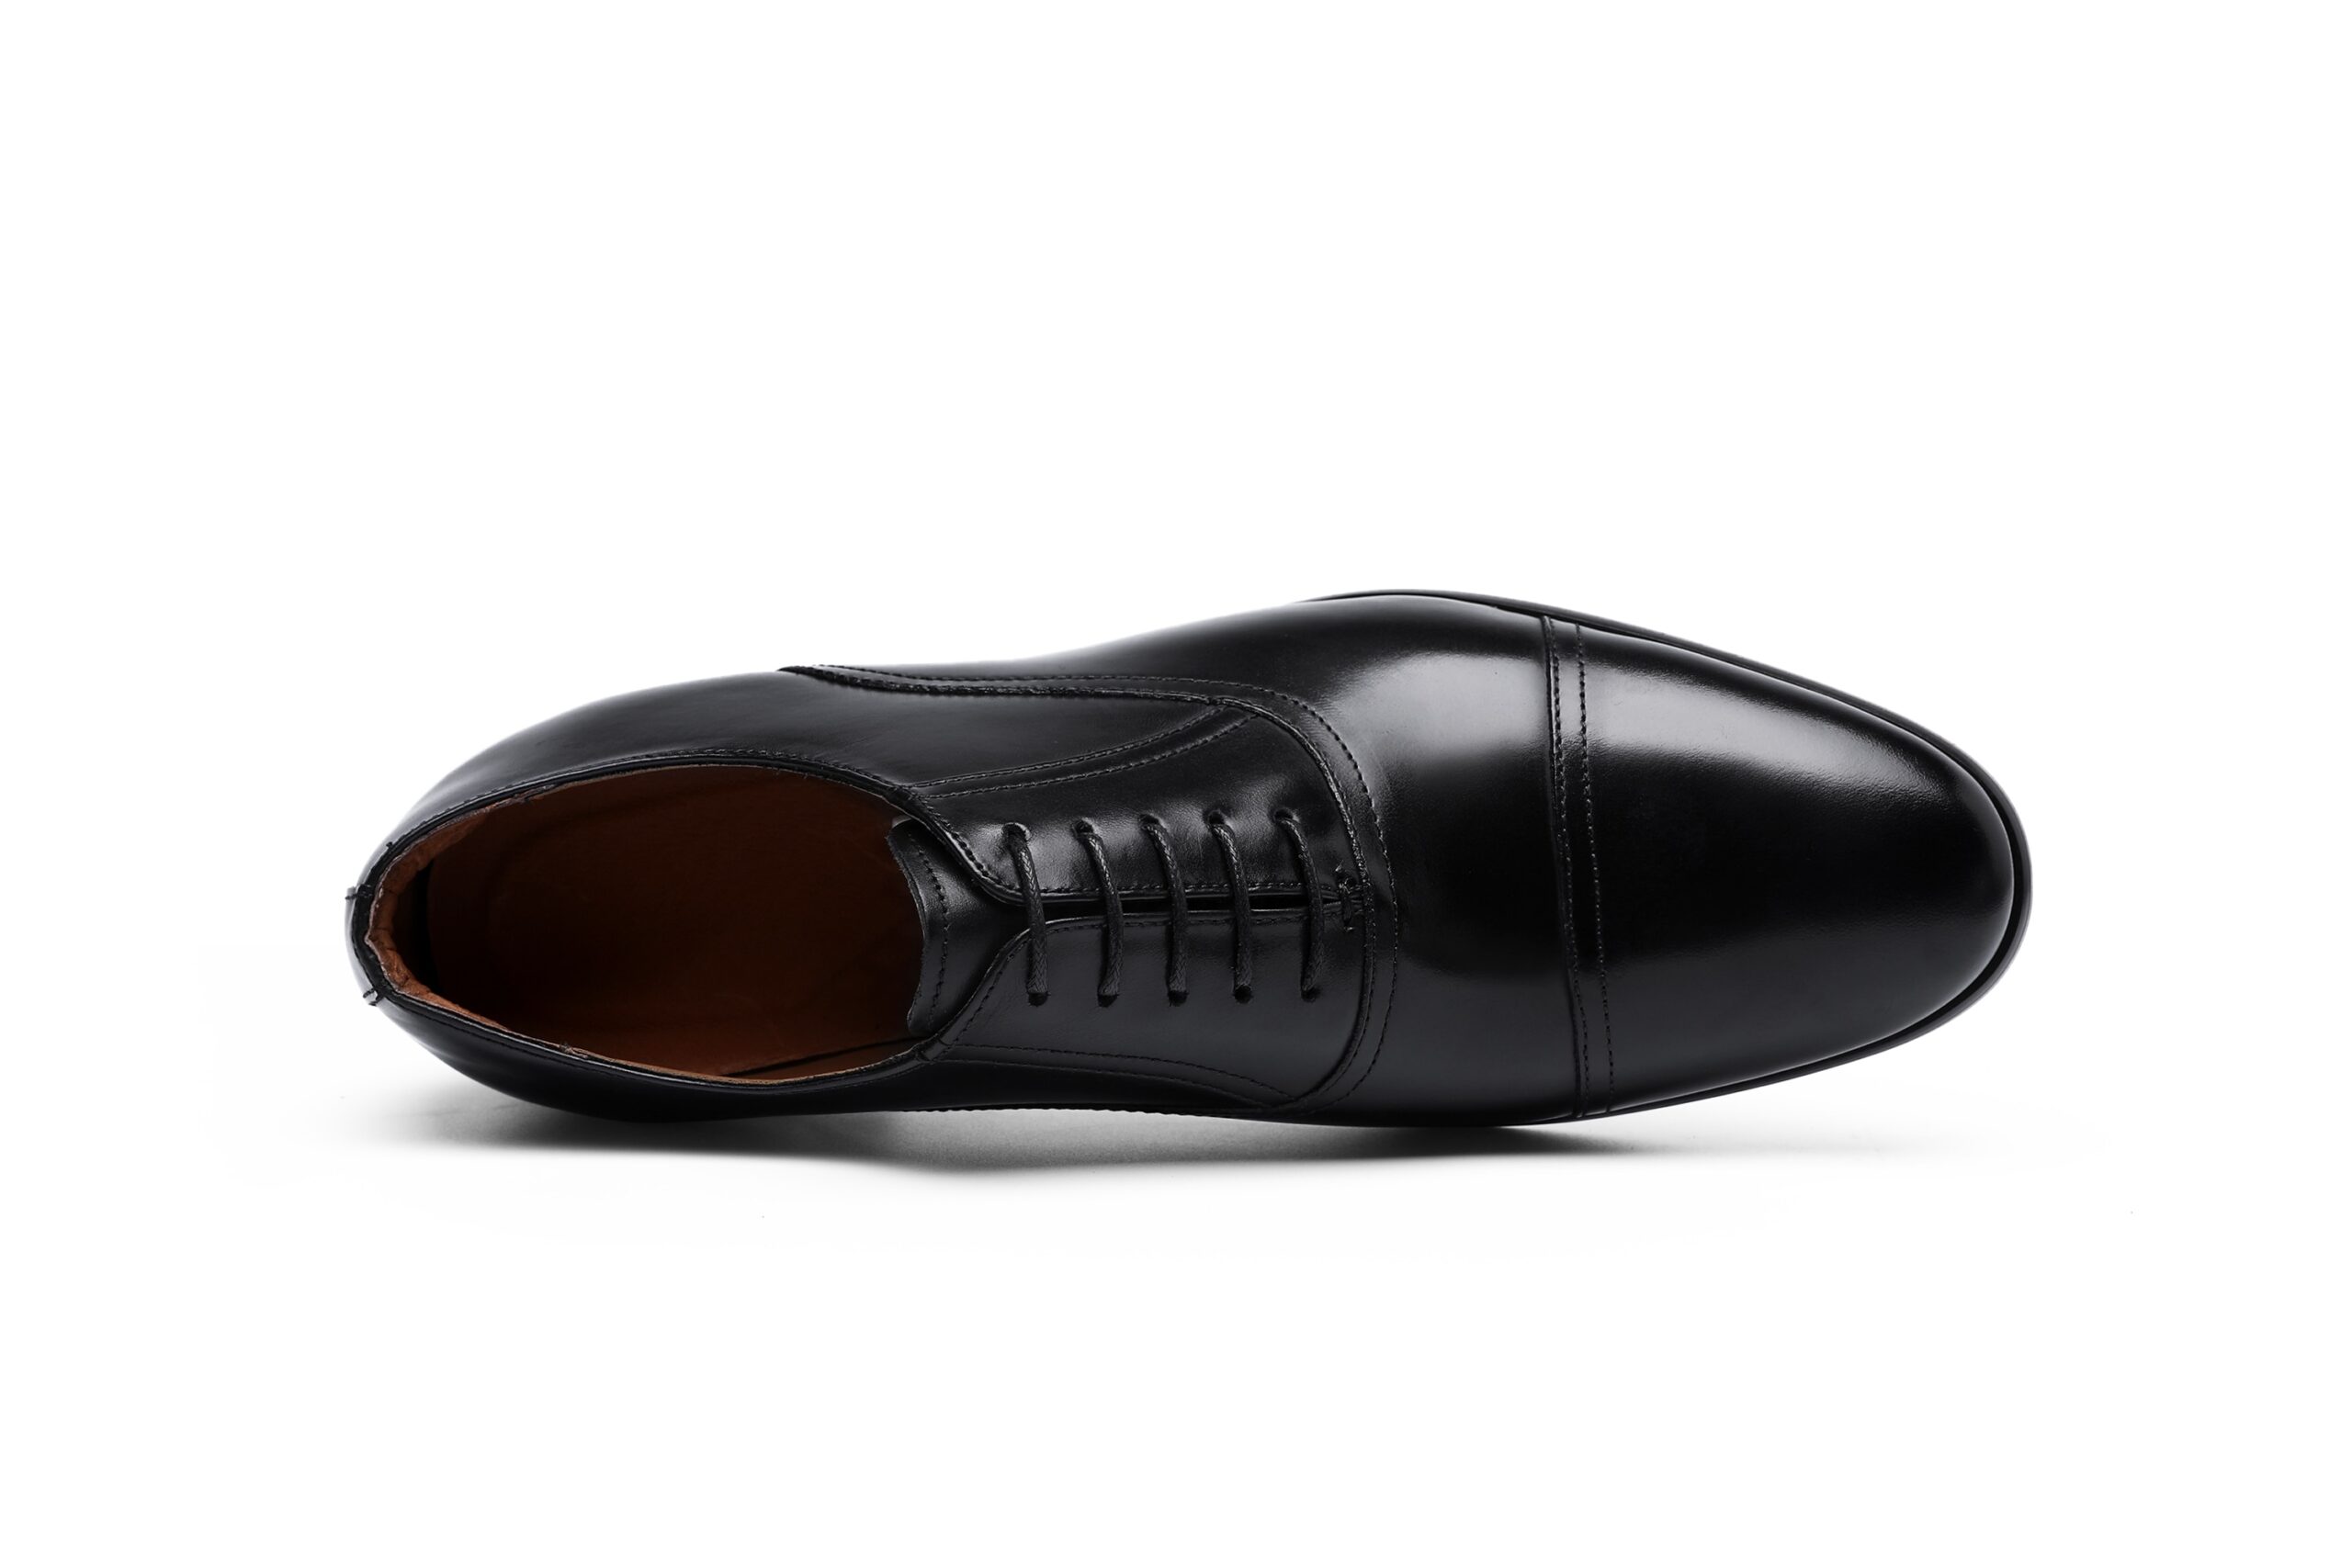 DESAI Genuine Leather Oxford Shoes